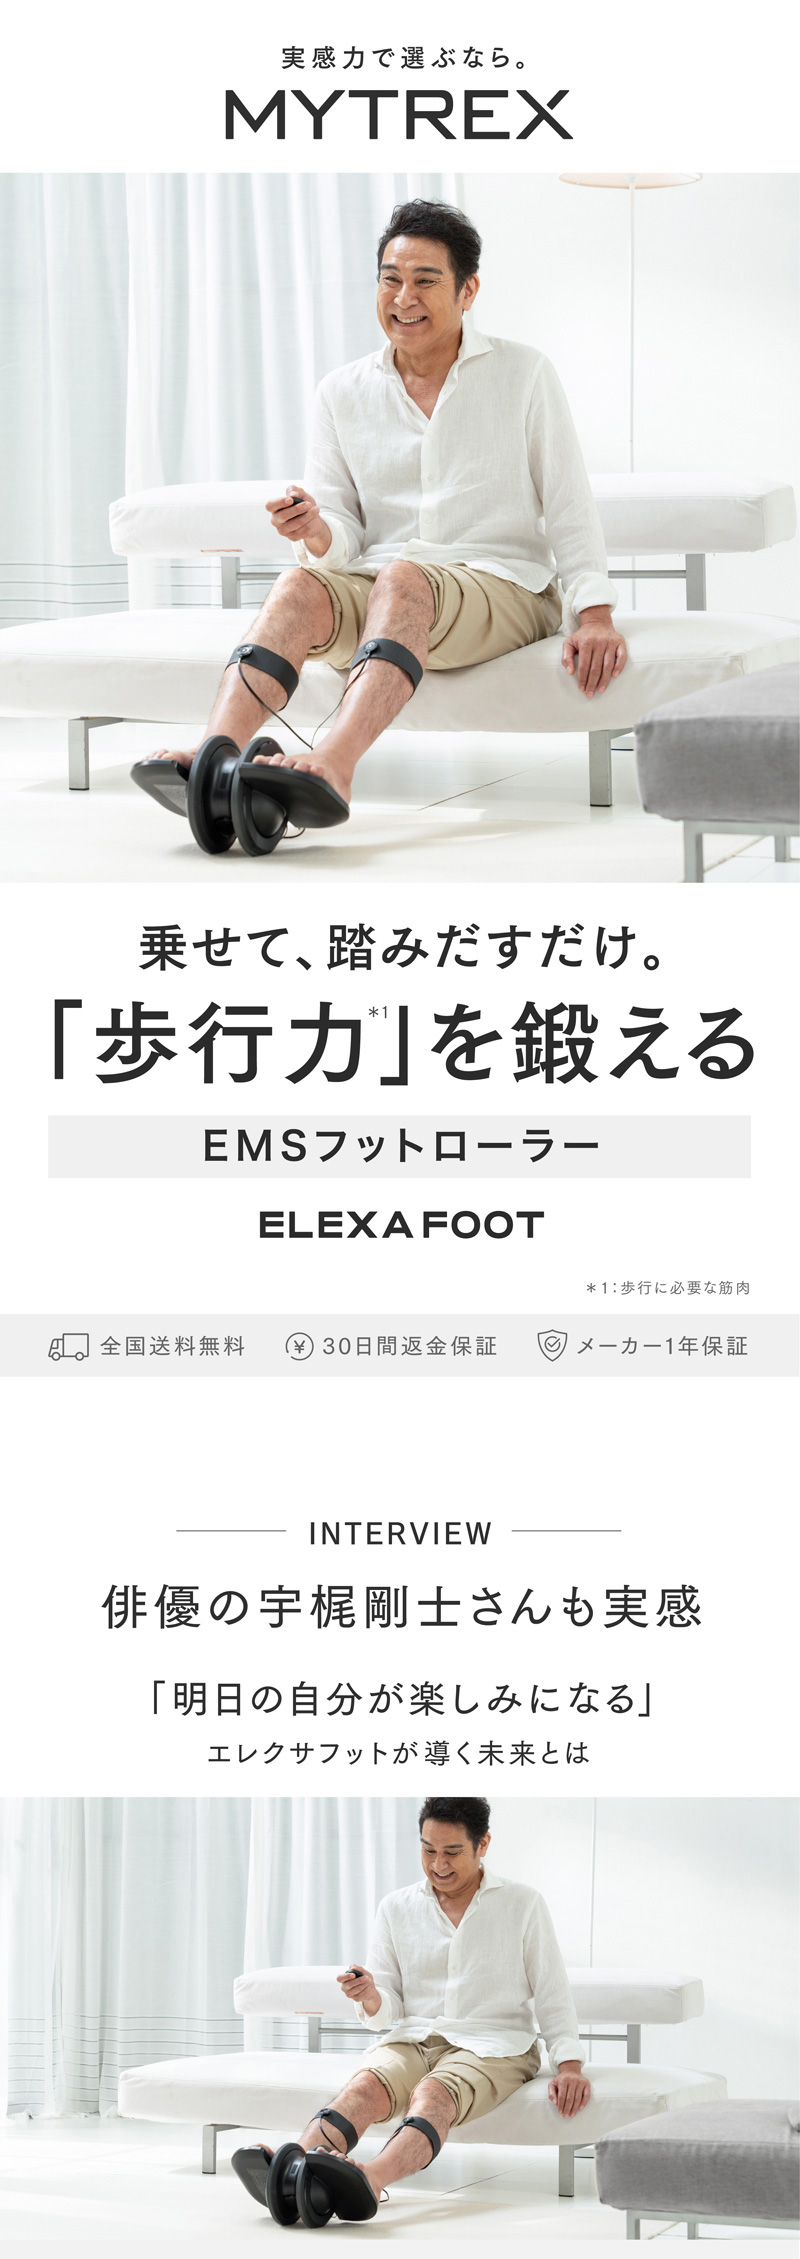 EMSフットローラー 健康器具 トレーニング 筋トレ MYTREX ELEXA FOOT